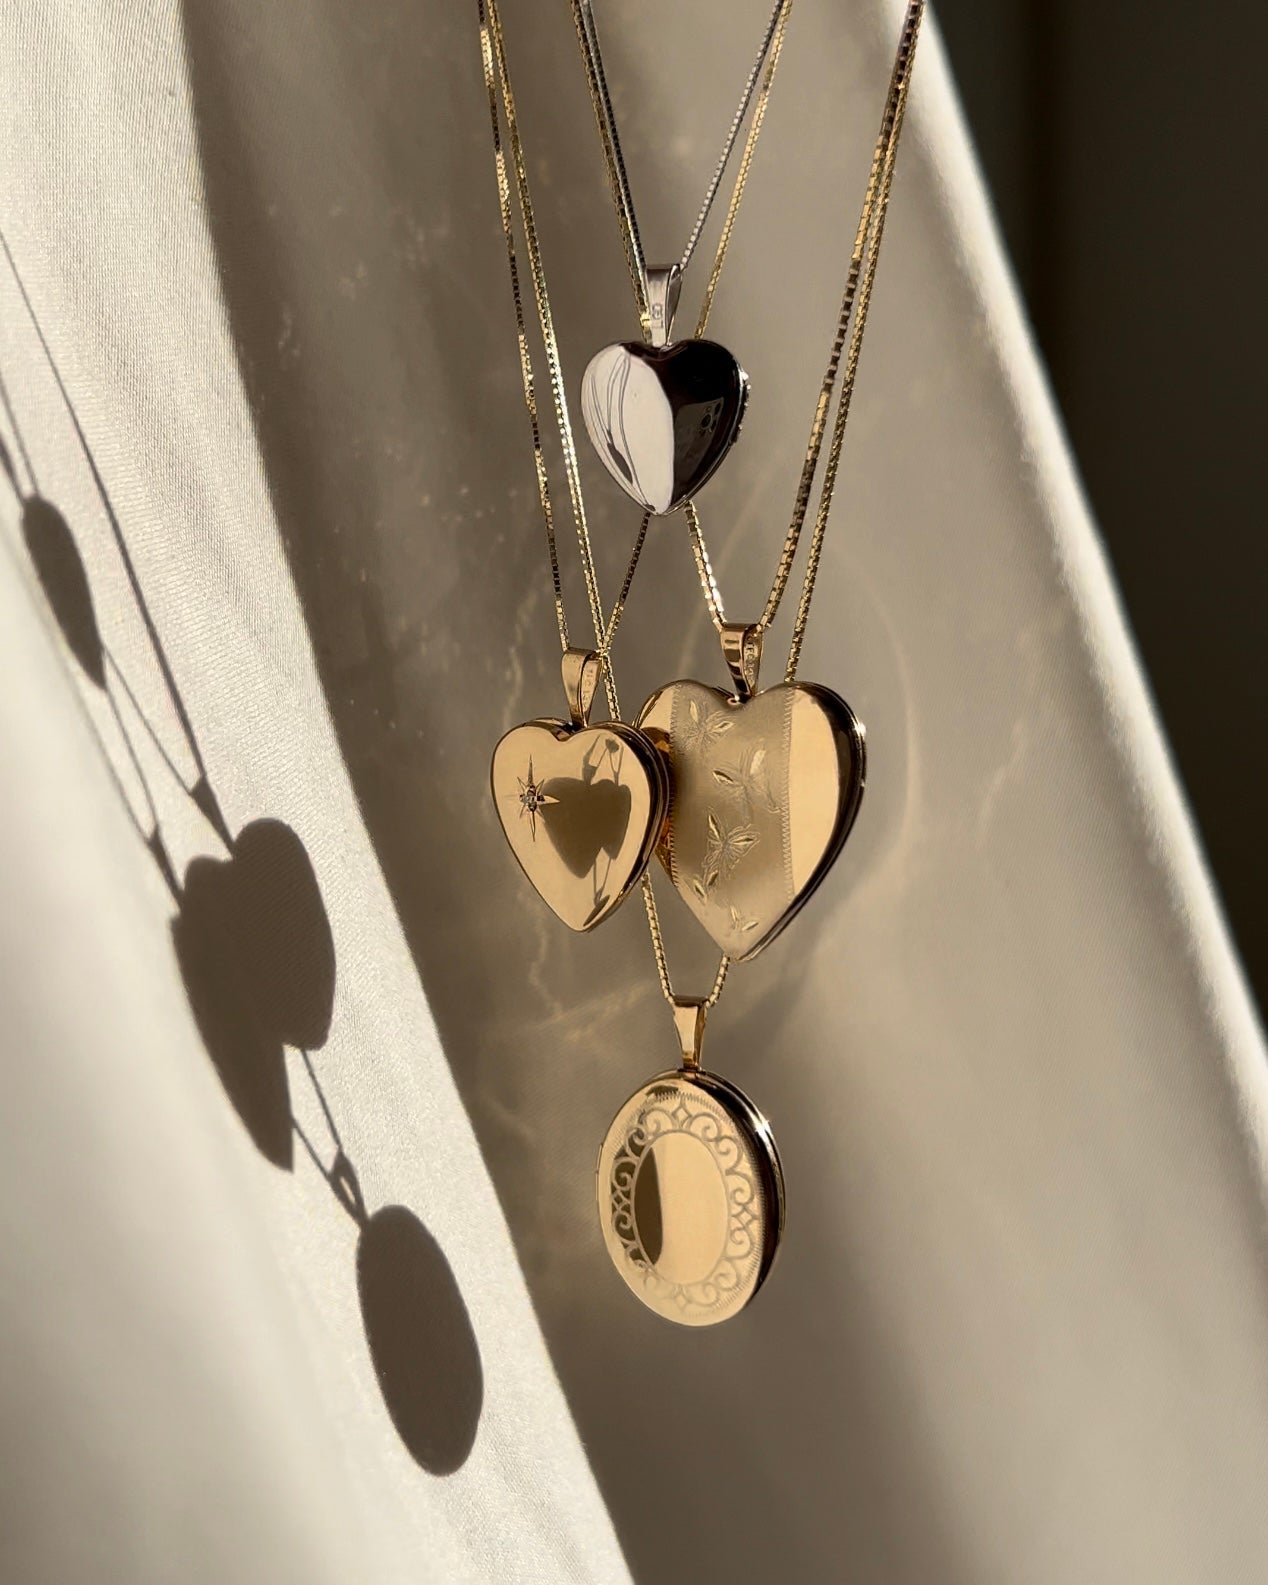 sweetheart heart locket necklace 14k white gold silver 